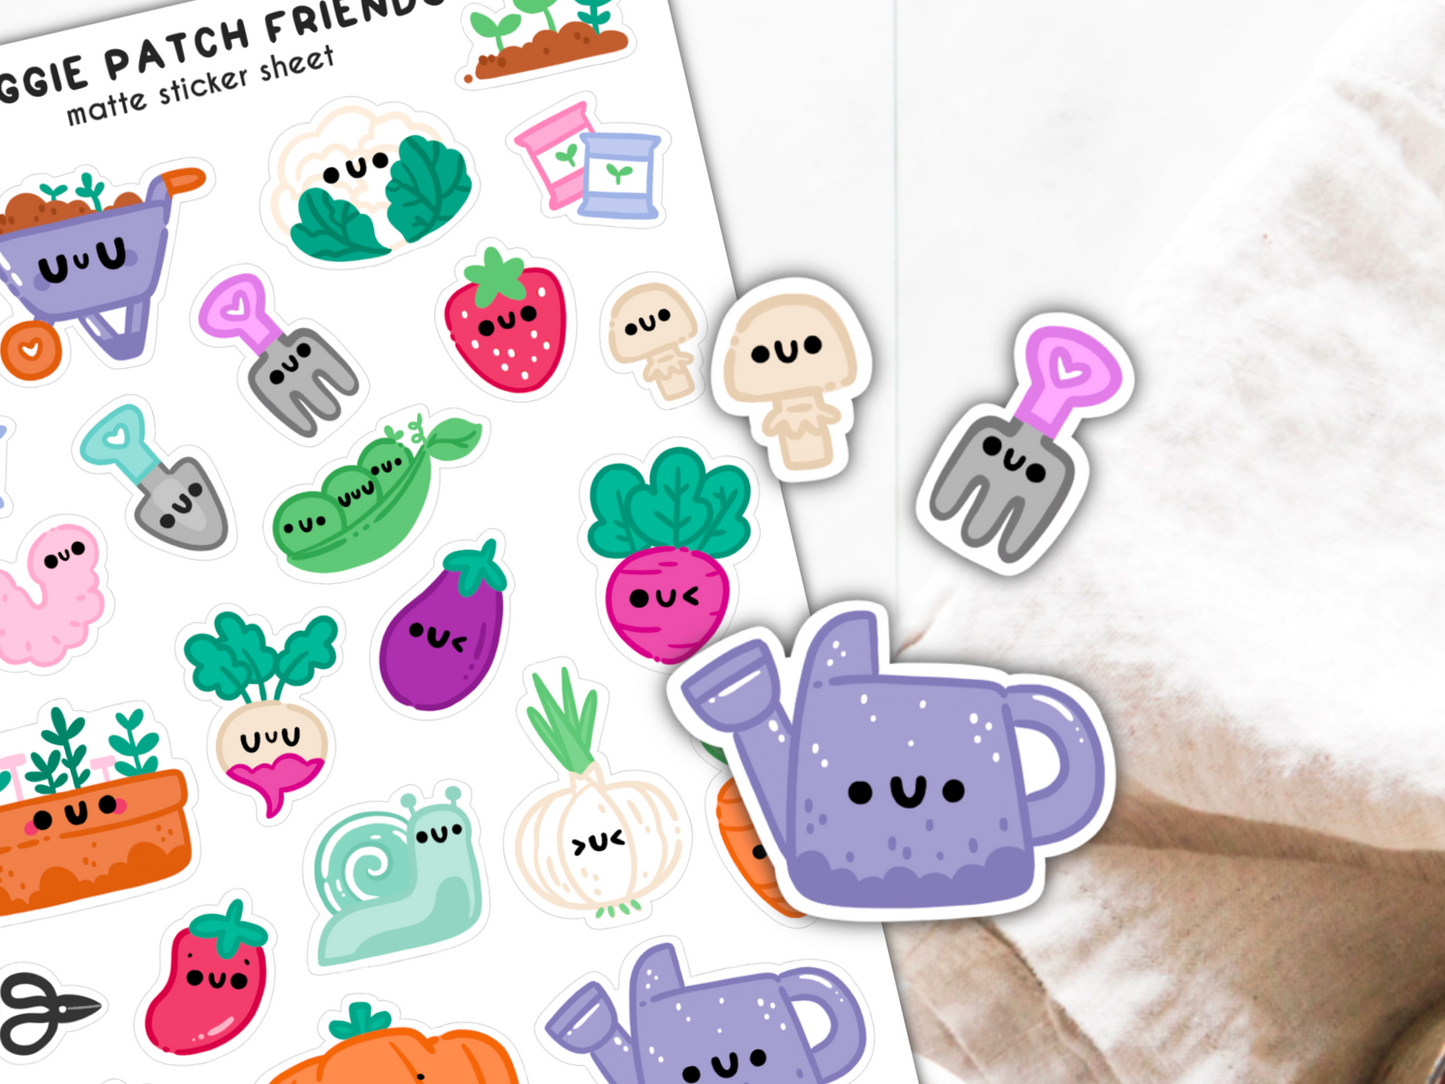 Veggie Patch Friends Sticker Sheet | Small Planner Stickers